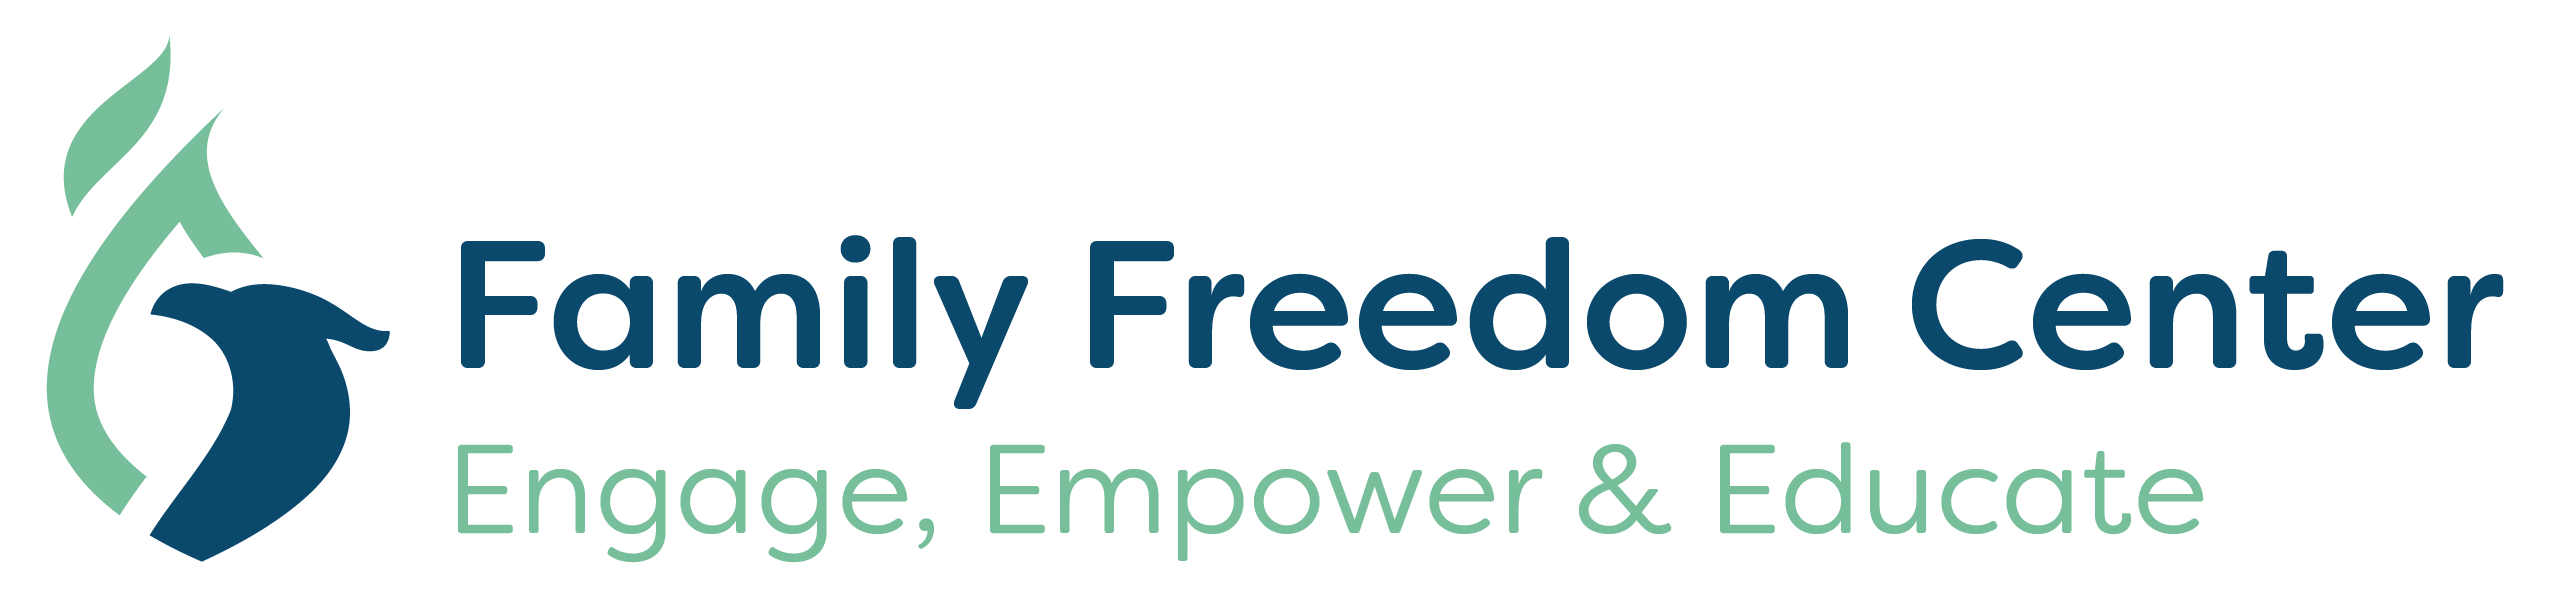 Family Freedom Center logo.